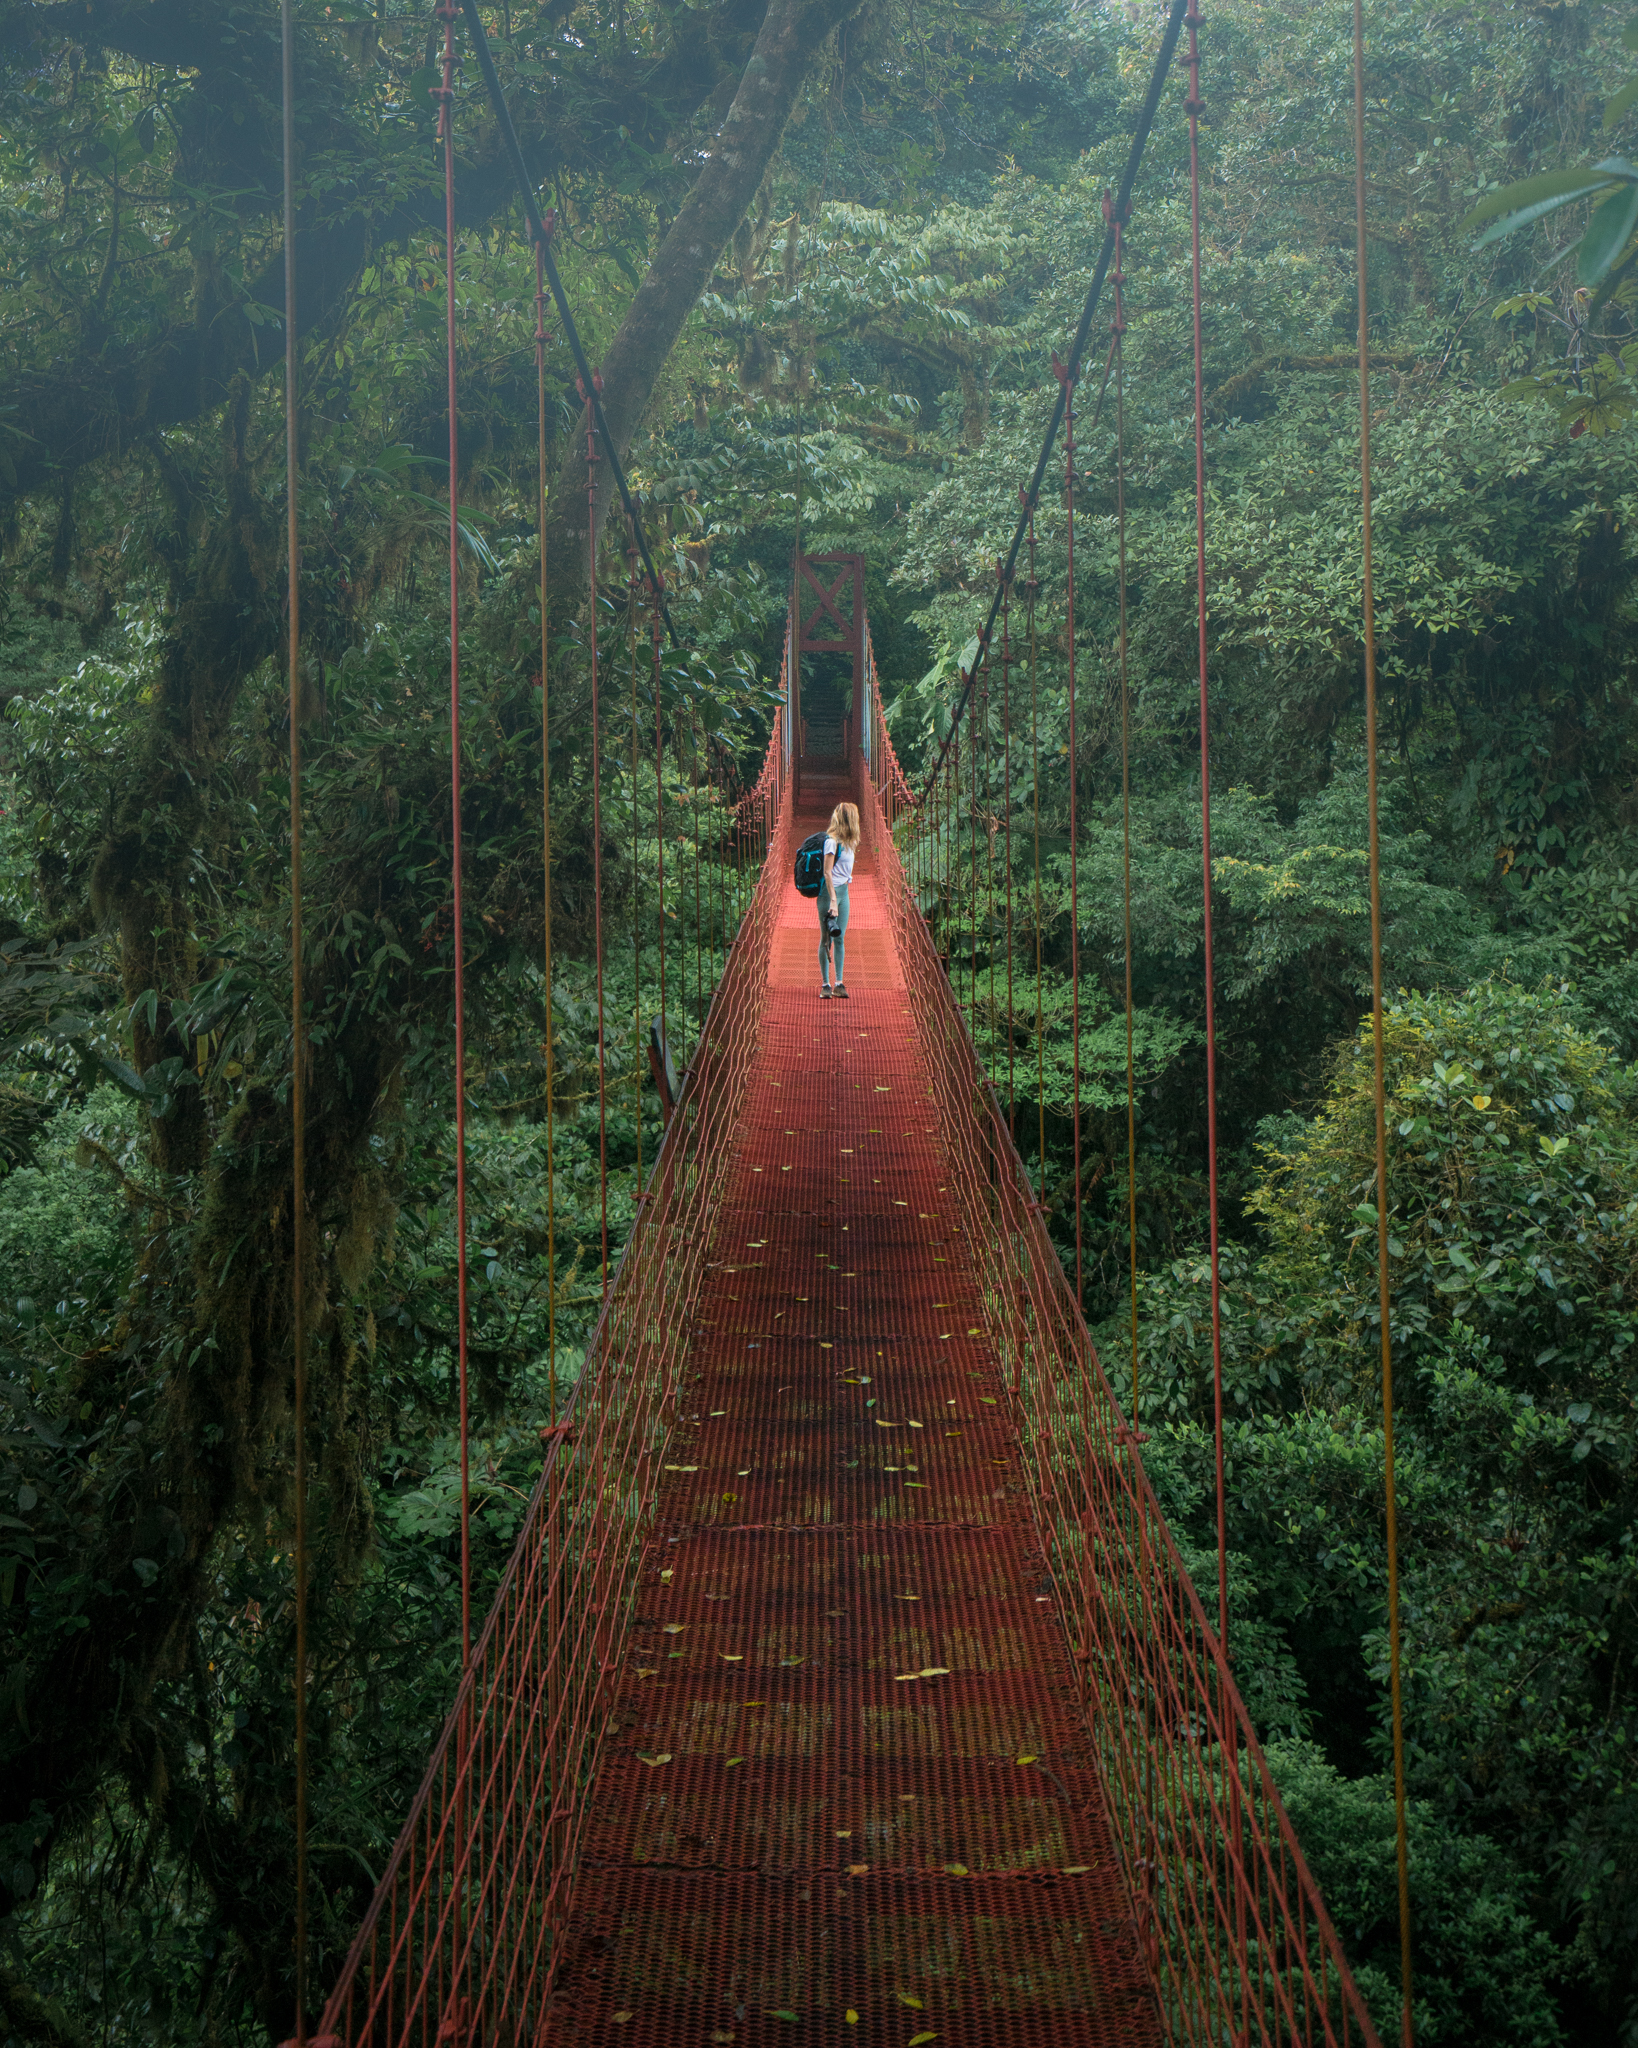 Picturesque suspension bridge in Monteverde Cloud Forest Biological Reserve, Costa Rica.